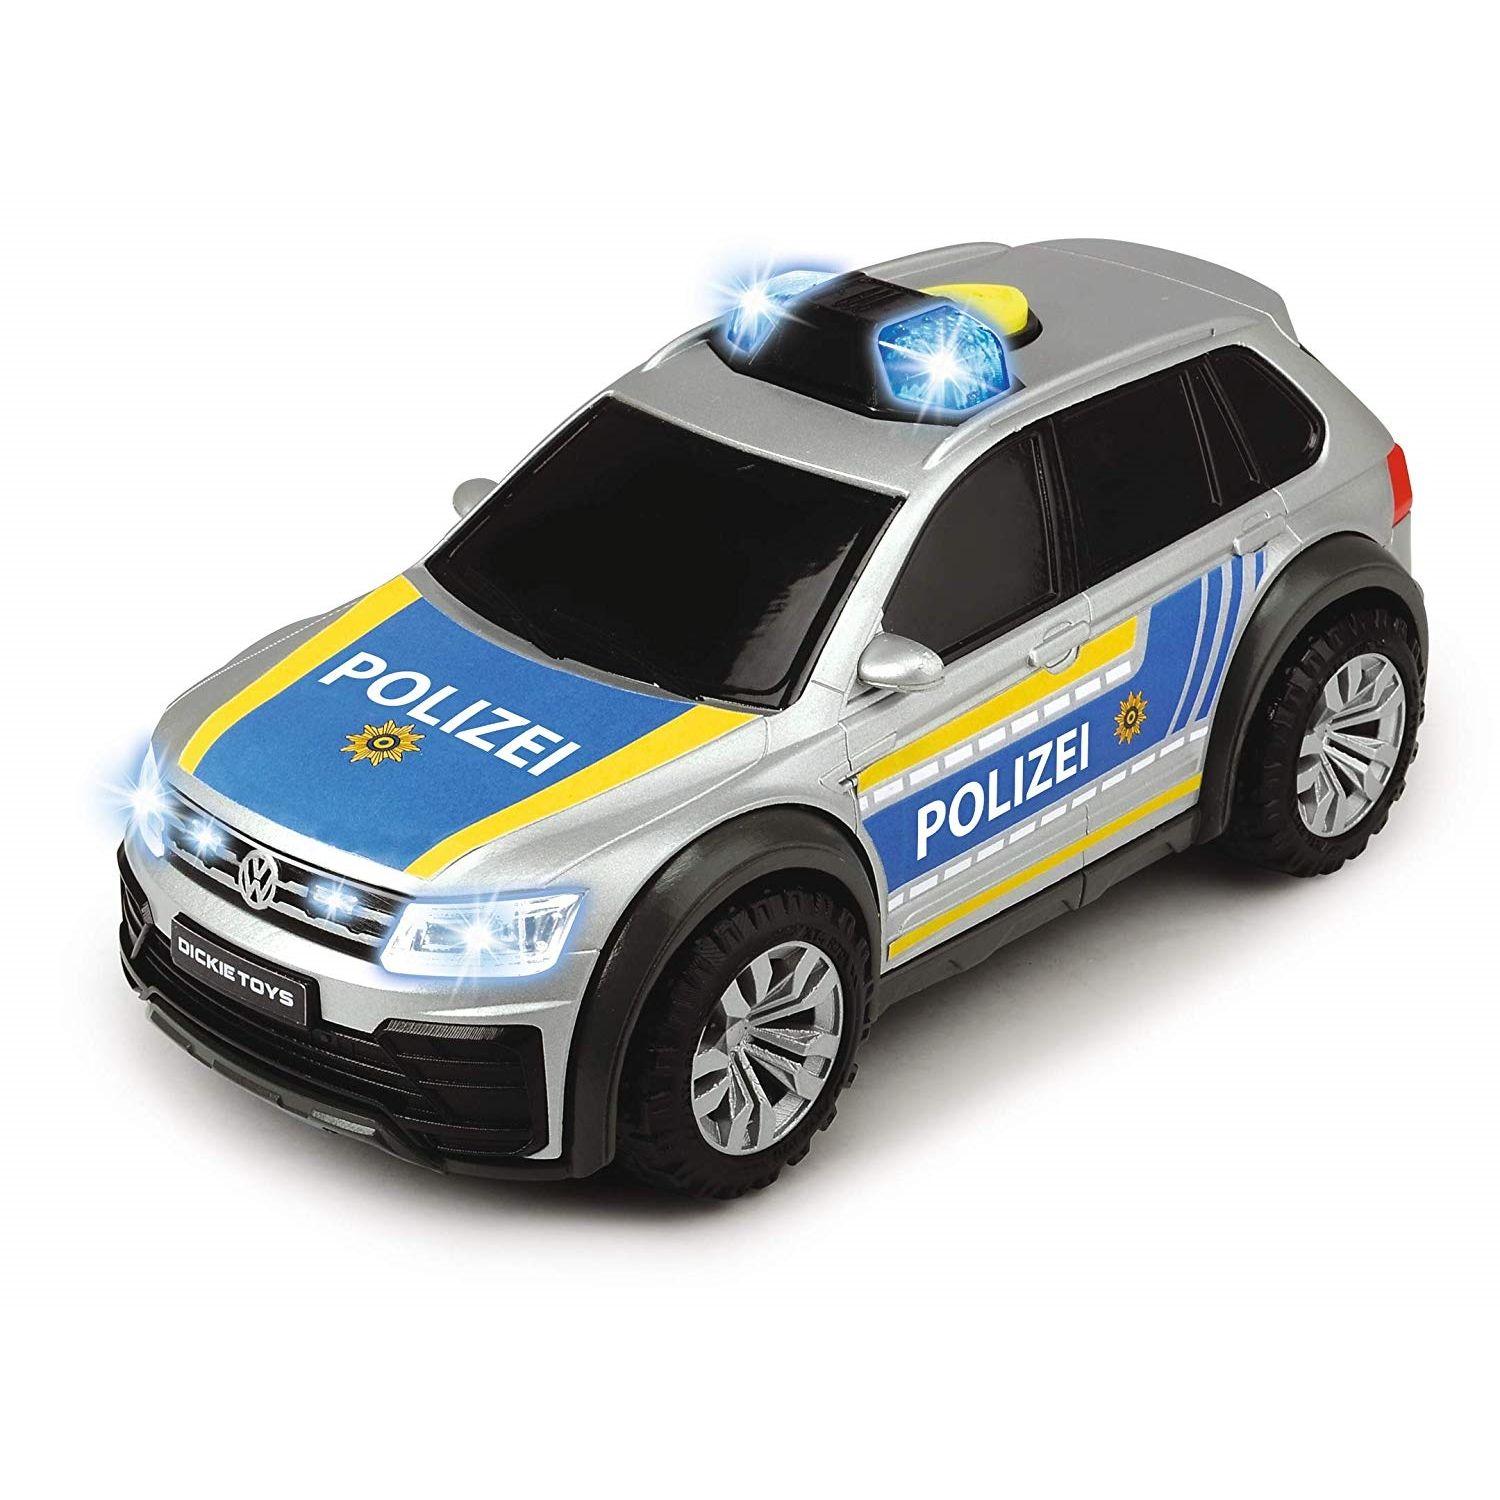 VW Tiguan Police - vehicules-radiocommandes-miniatures